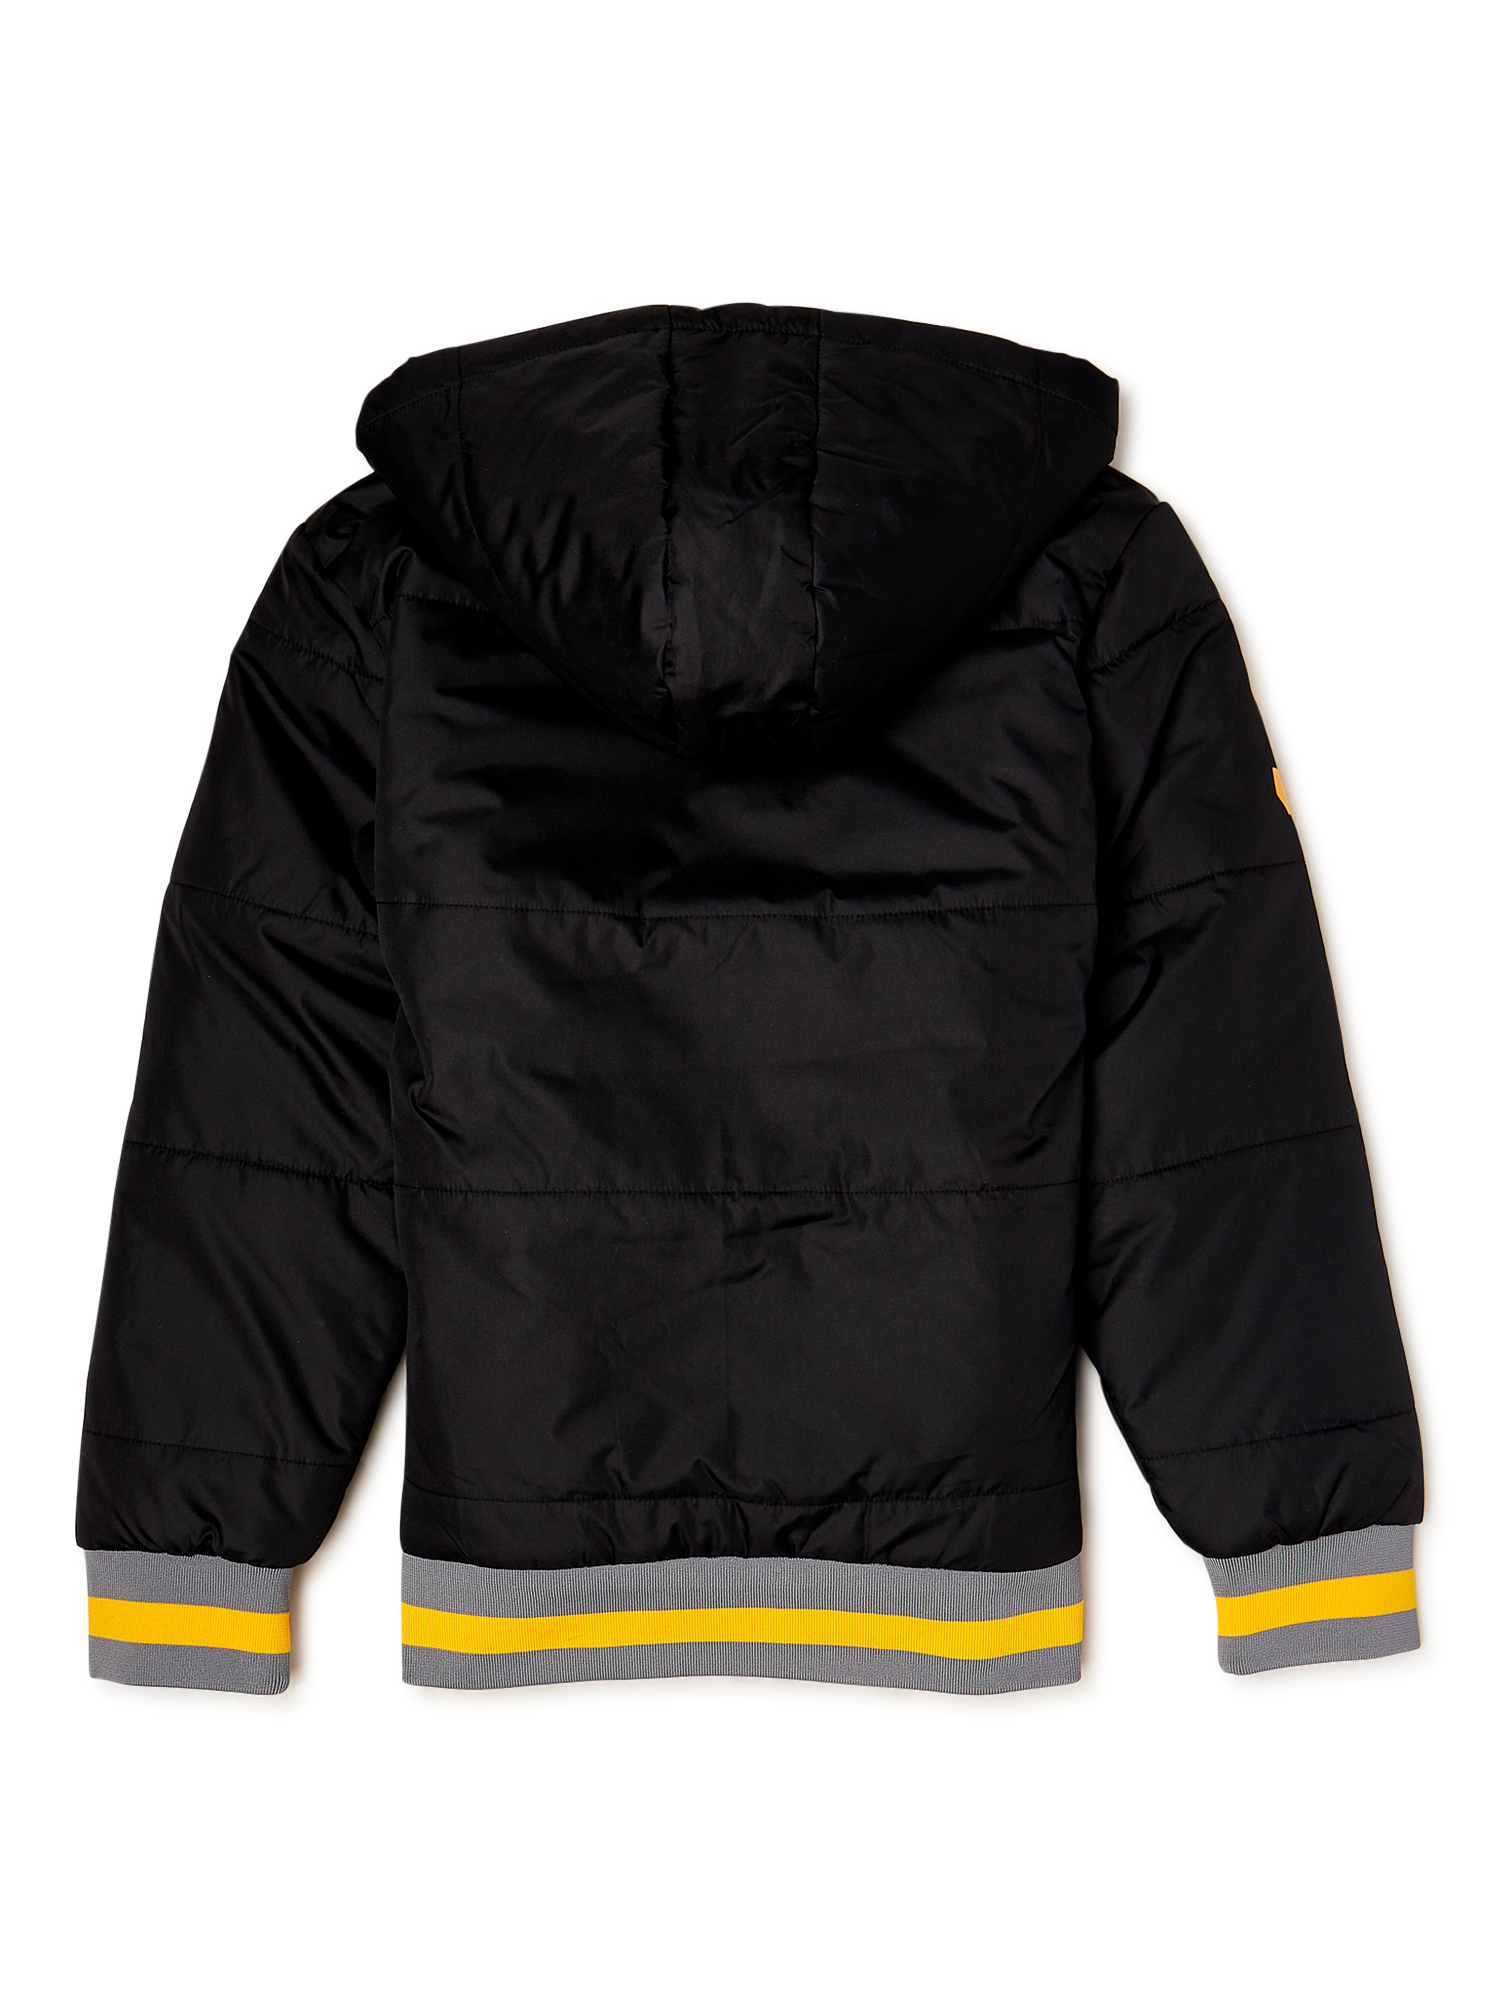 U.S. Polo Assn. Boys Varsity Puffer Jacket, Sizes 8-20 - image 4 of 4